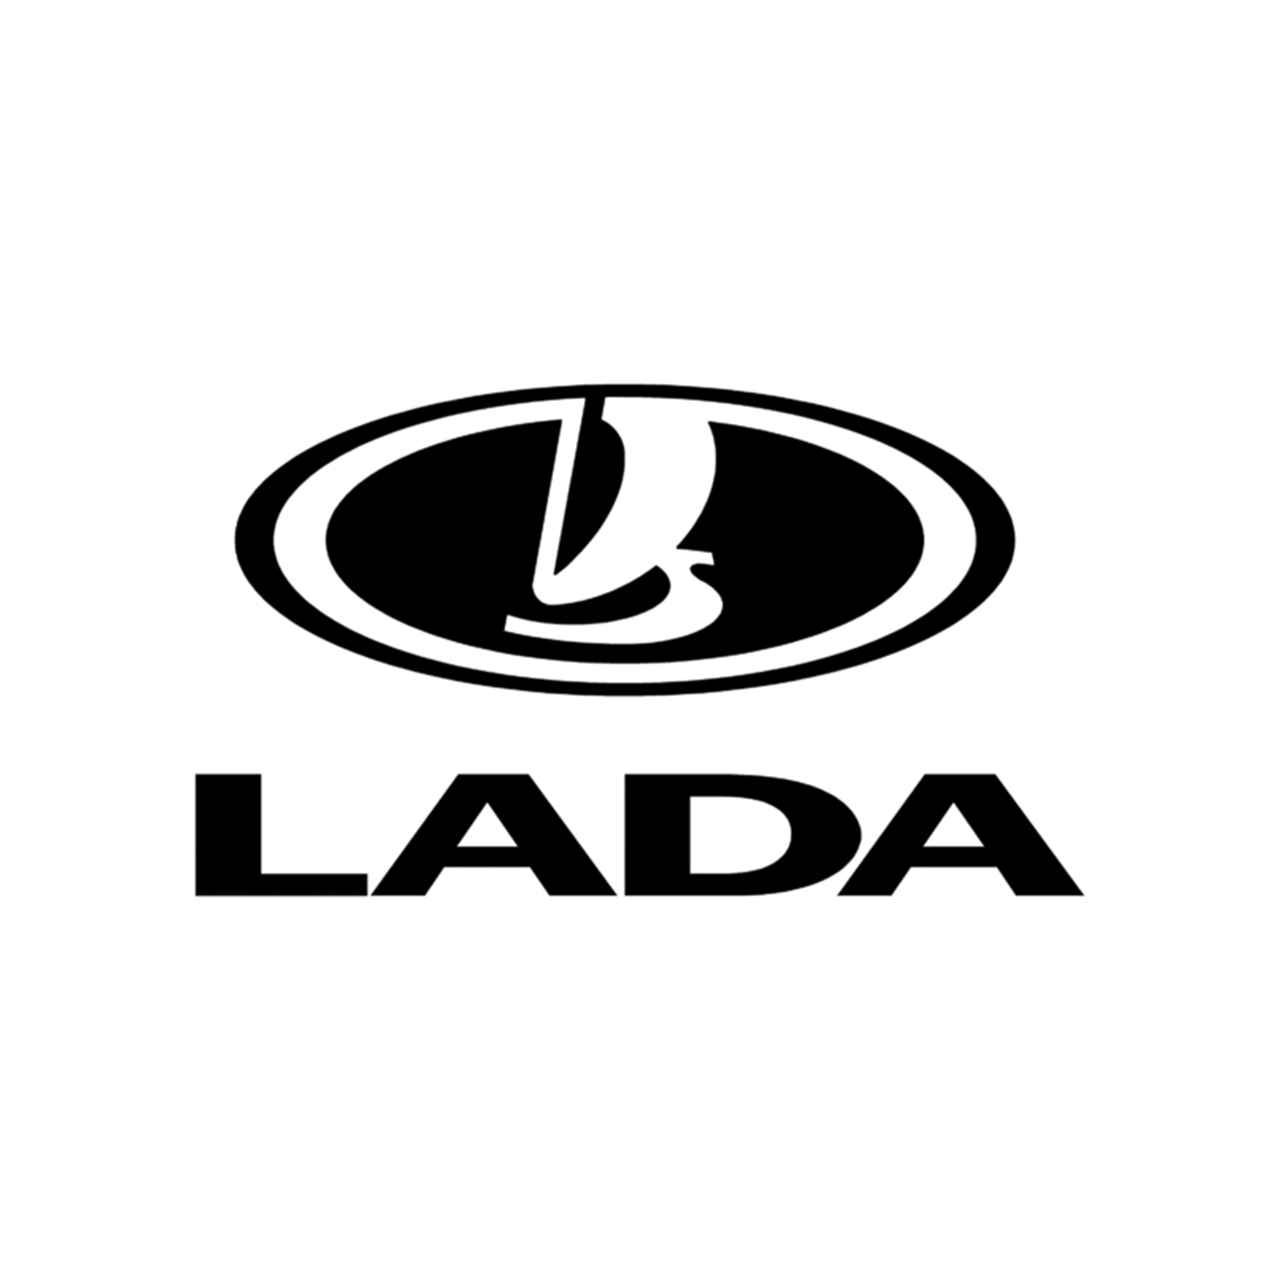 Lada-Logo-Vinyl-Decal.jpg